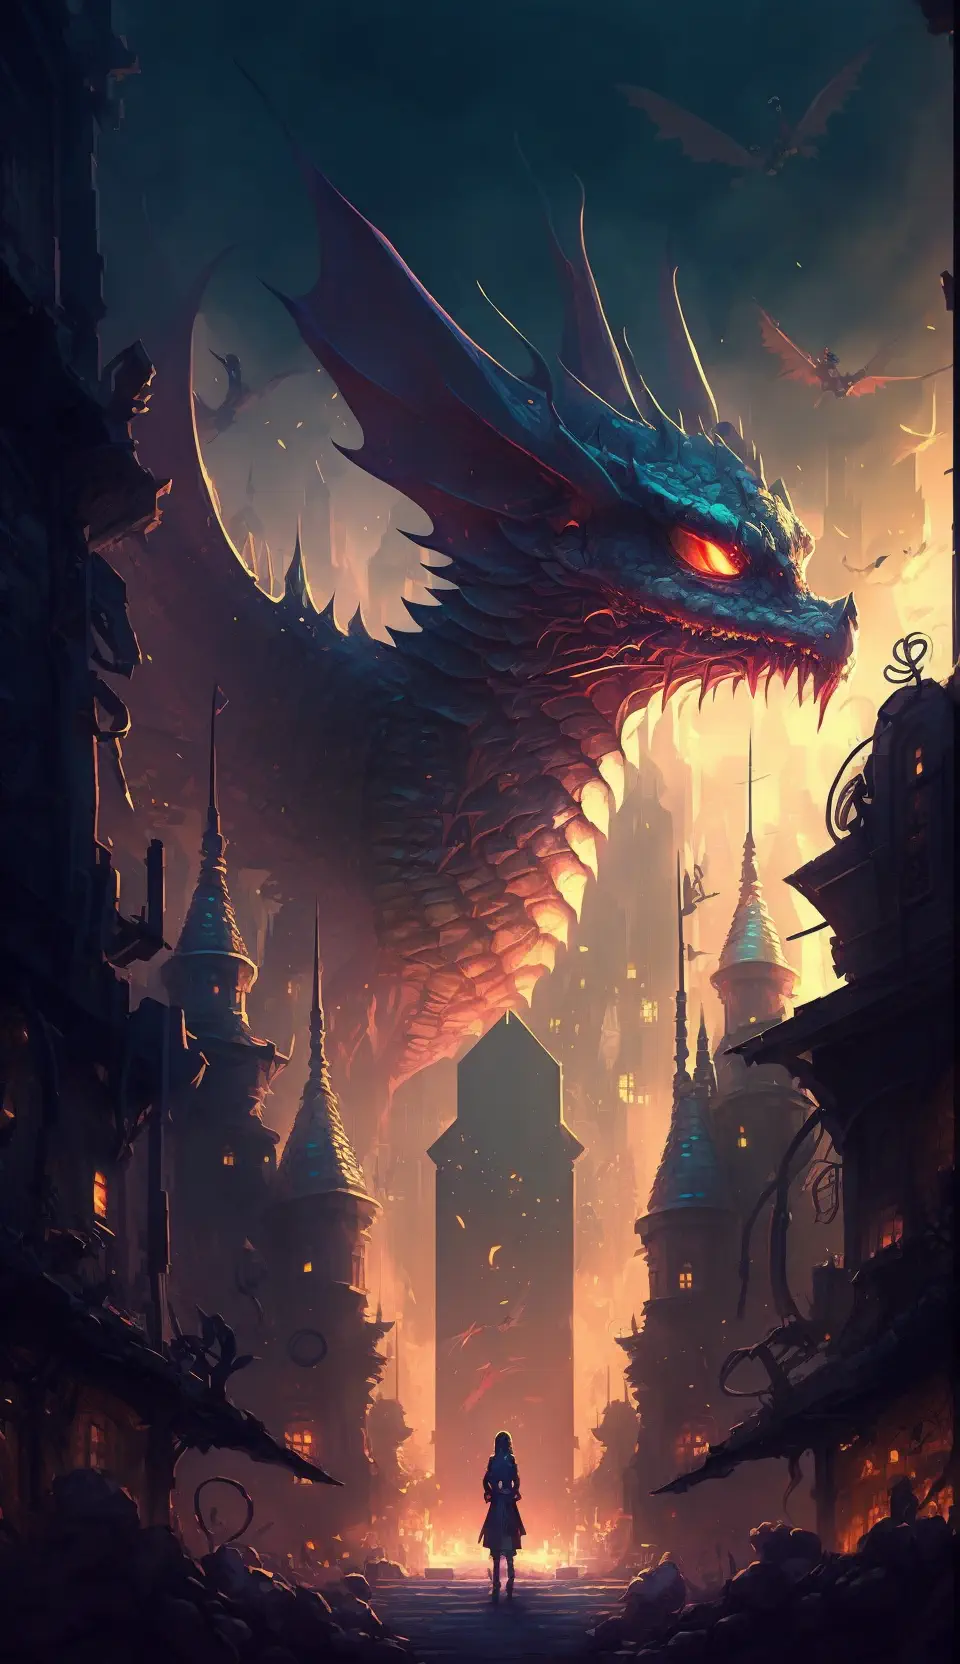 Drak0no7_fantasy_city_inhabited_by_dragons_illustration_art_sty_c2c0545a-9aca-46f7-b118-e7f85f7b9ff0